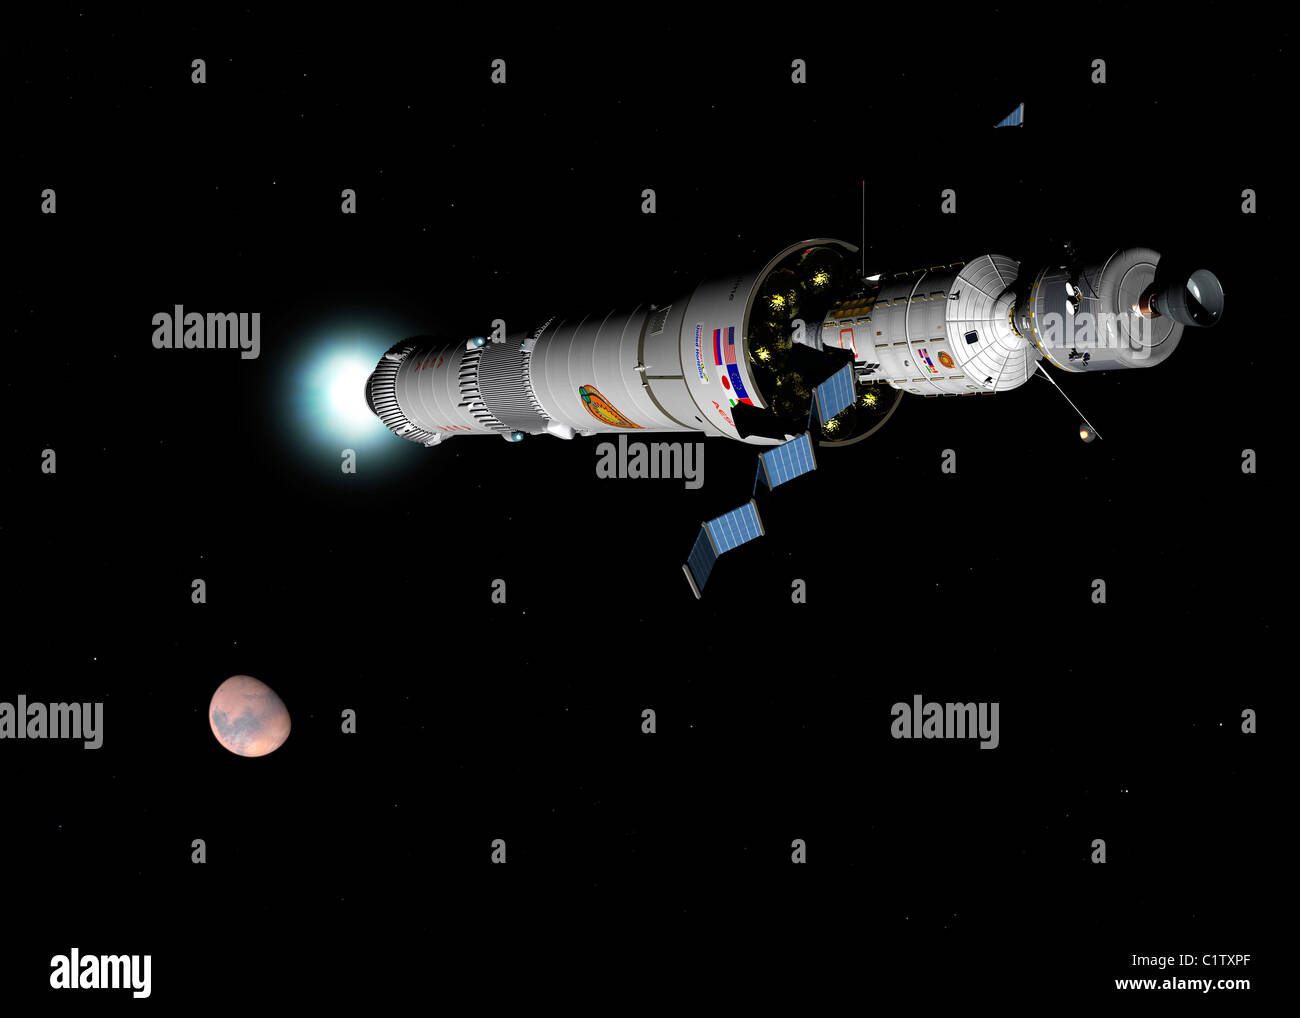 Phobos mission rocket brakes for Mars orbit. Stock Photo